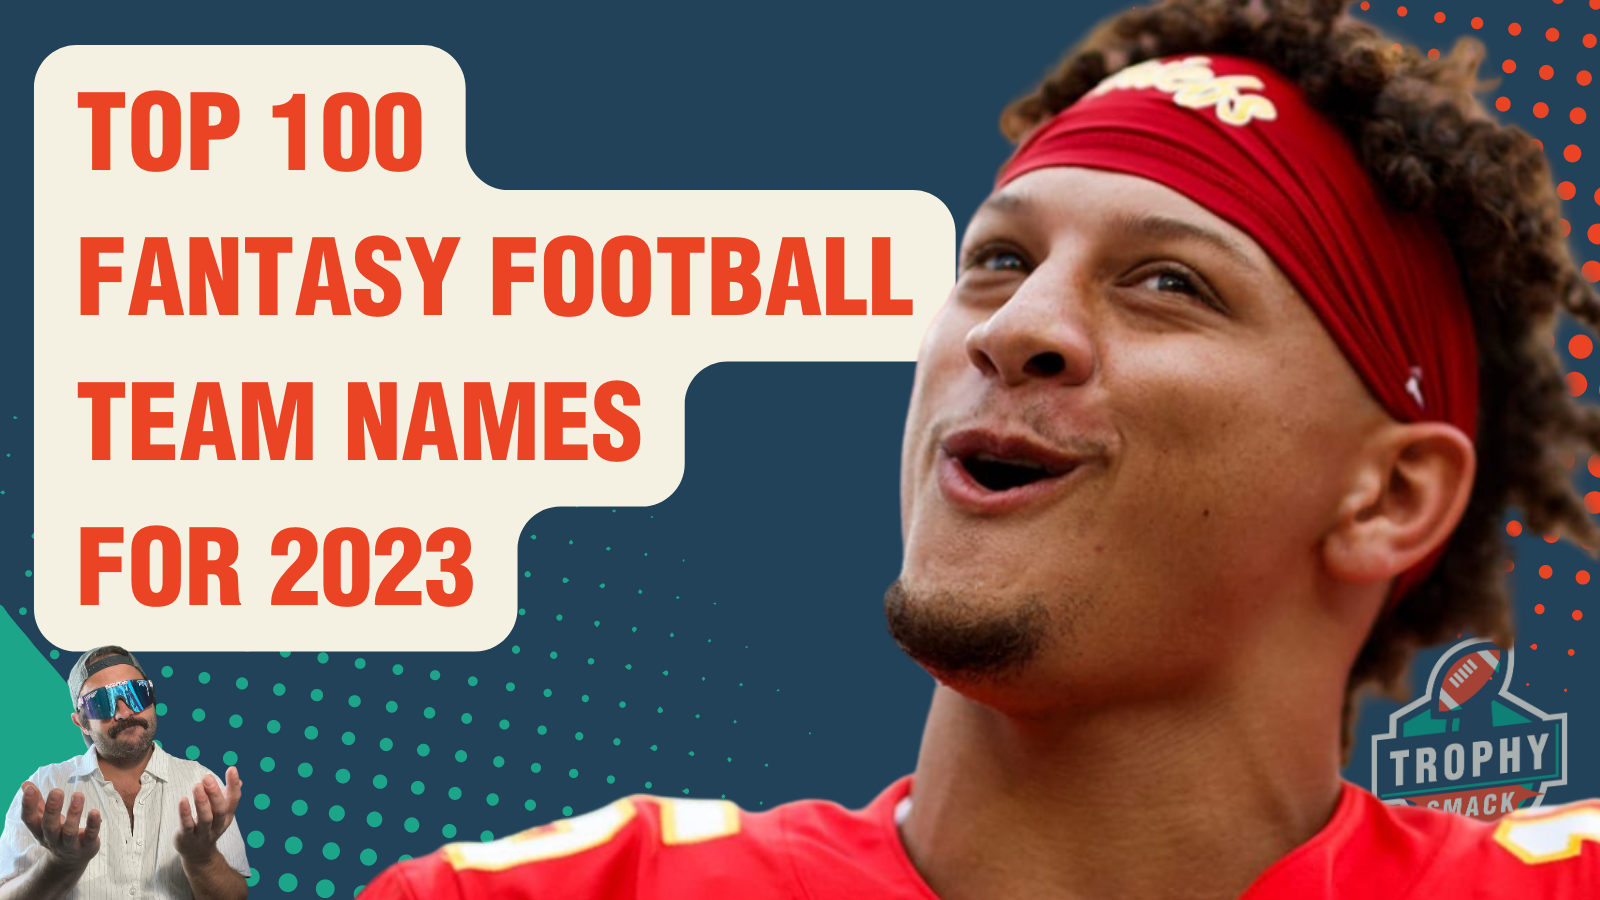 Top 100 List of Fantasy Football Team Names for 2022 - TrophySmack